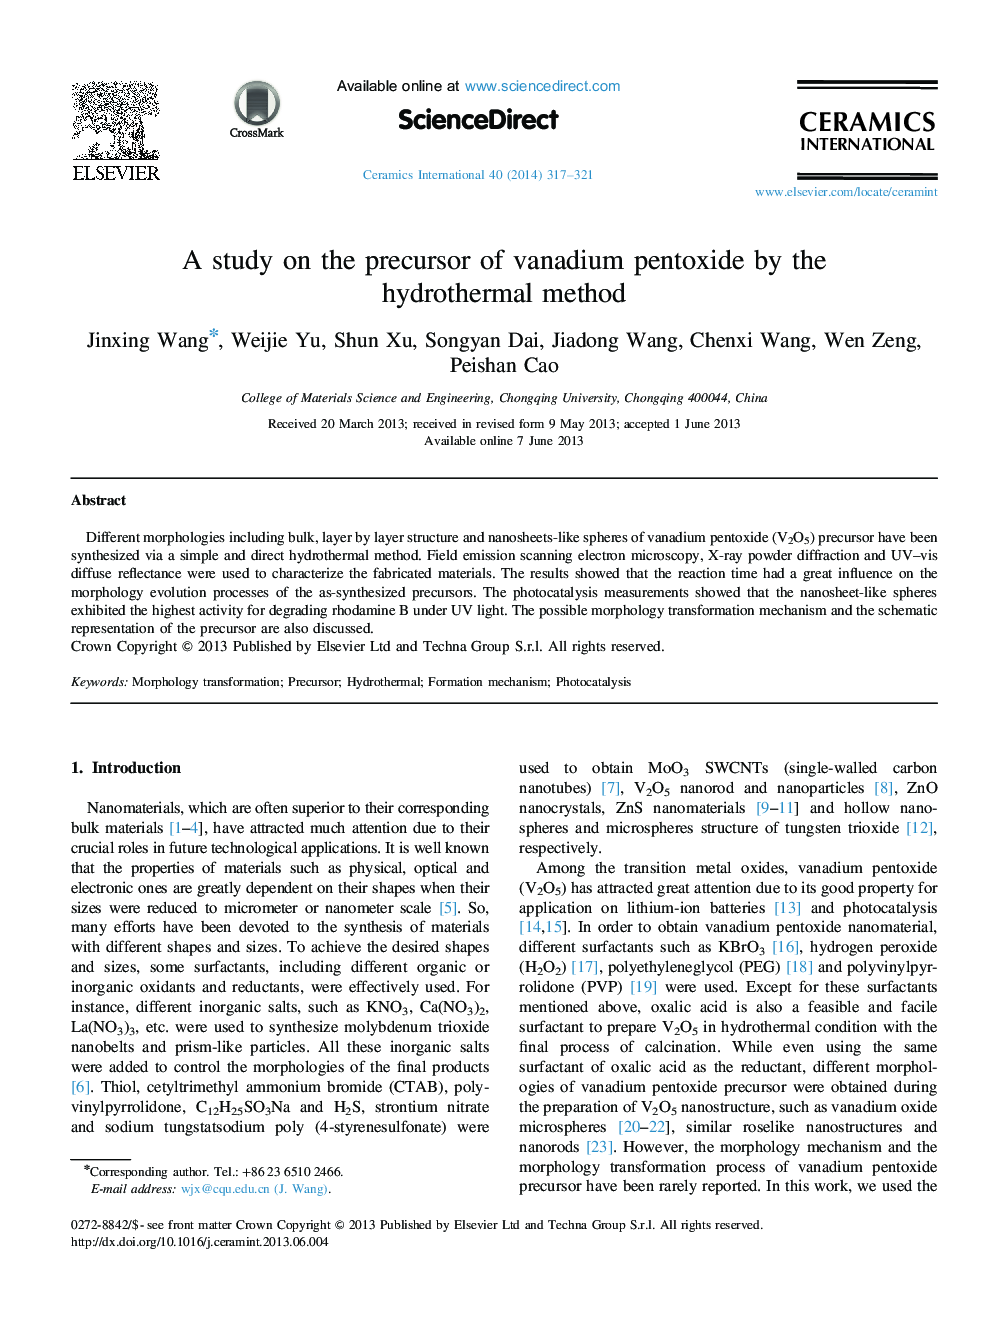 A study on the precursor of vanadium pentoxide by the hydrothermal method